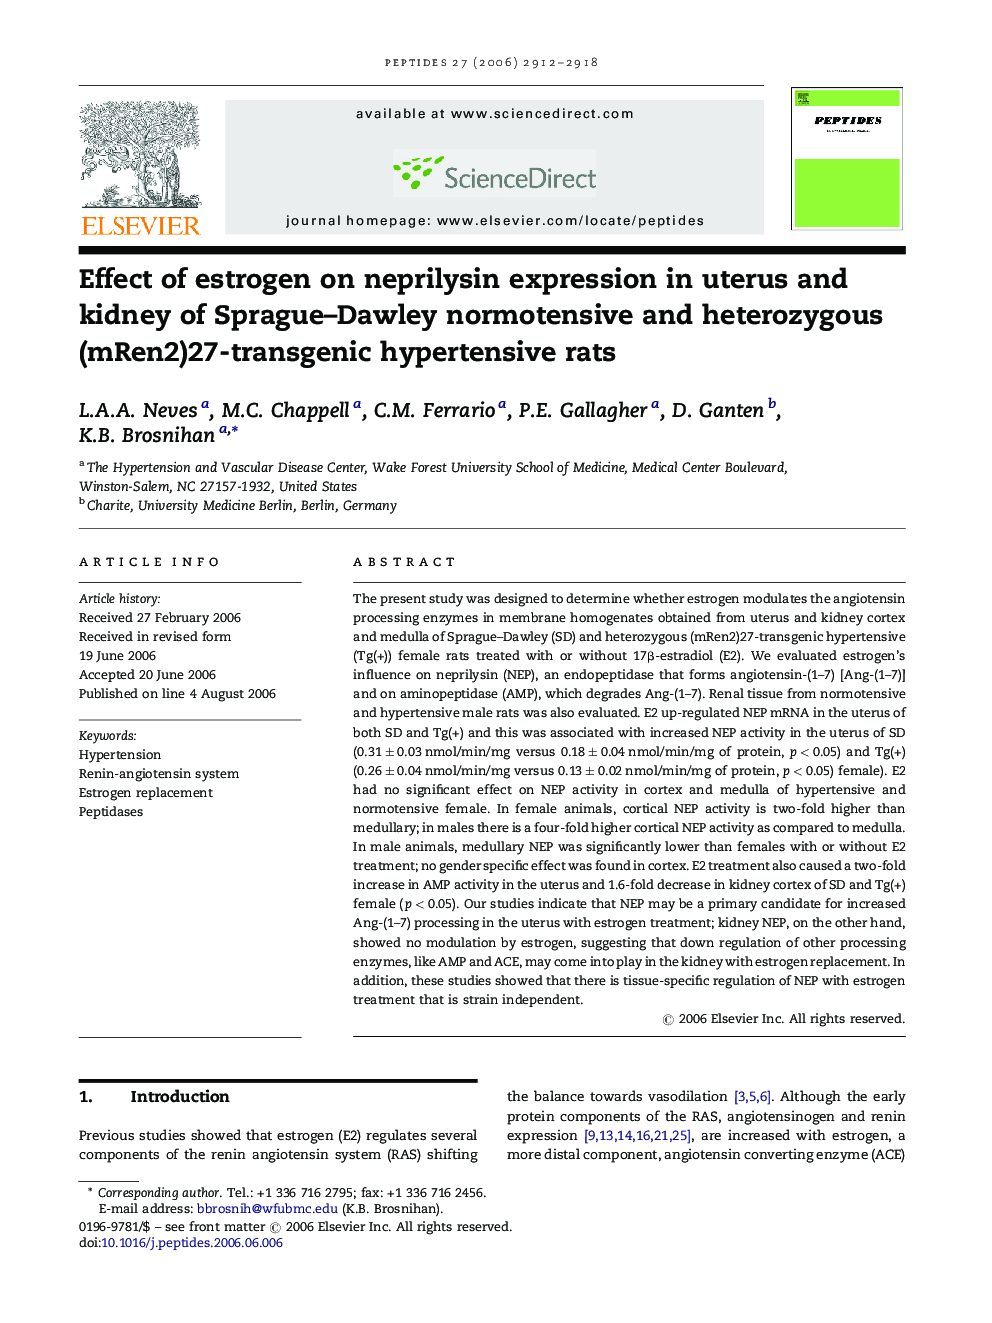 Effect of estrogen on neprilysin expression in uterus and kidney of Sprague–Dawley normotensive and heterozygous (mRen2)27-transgenic hypertensive rats